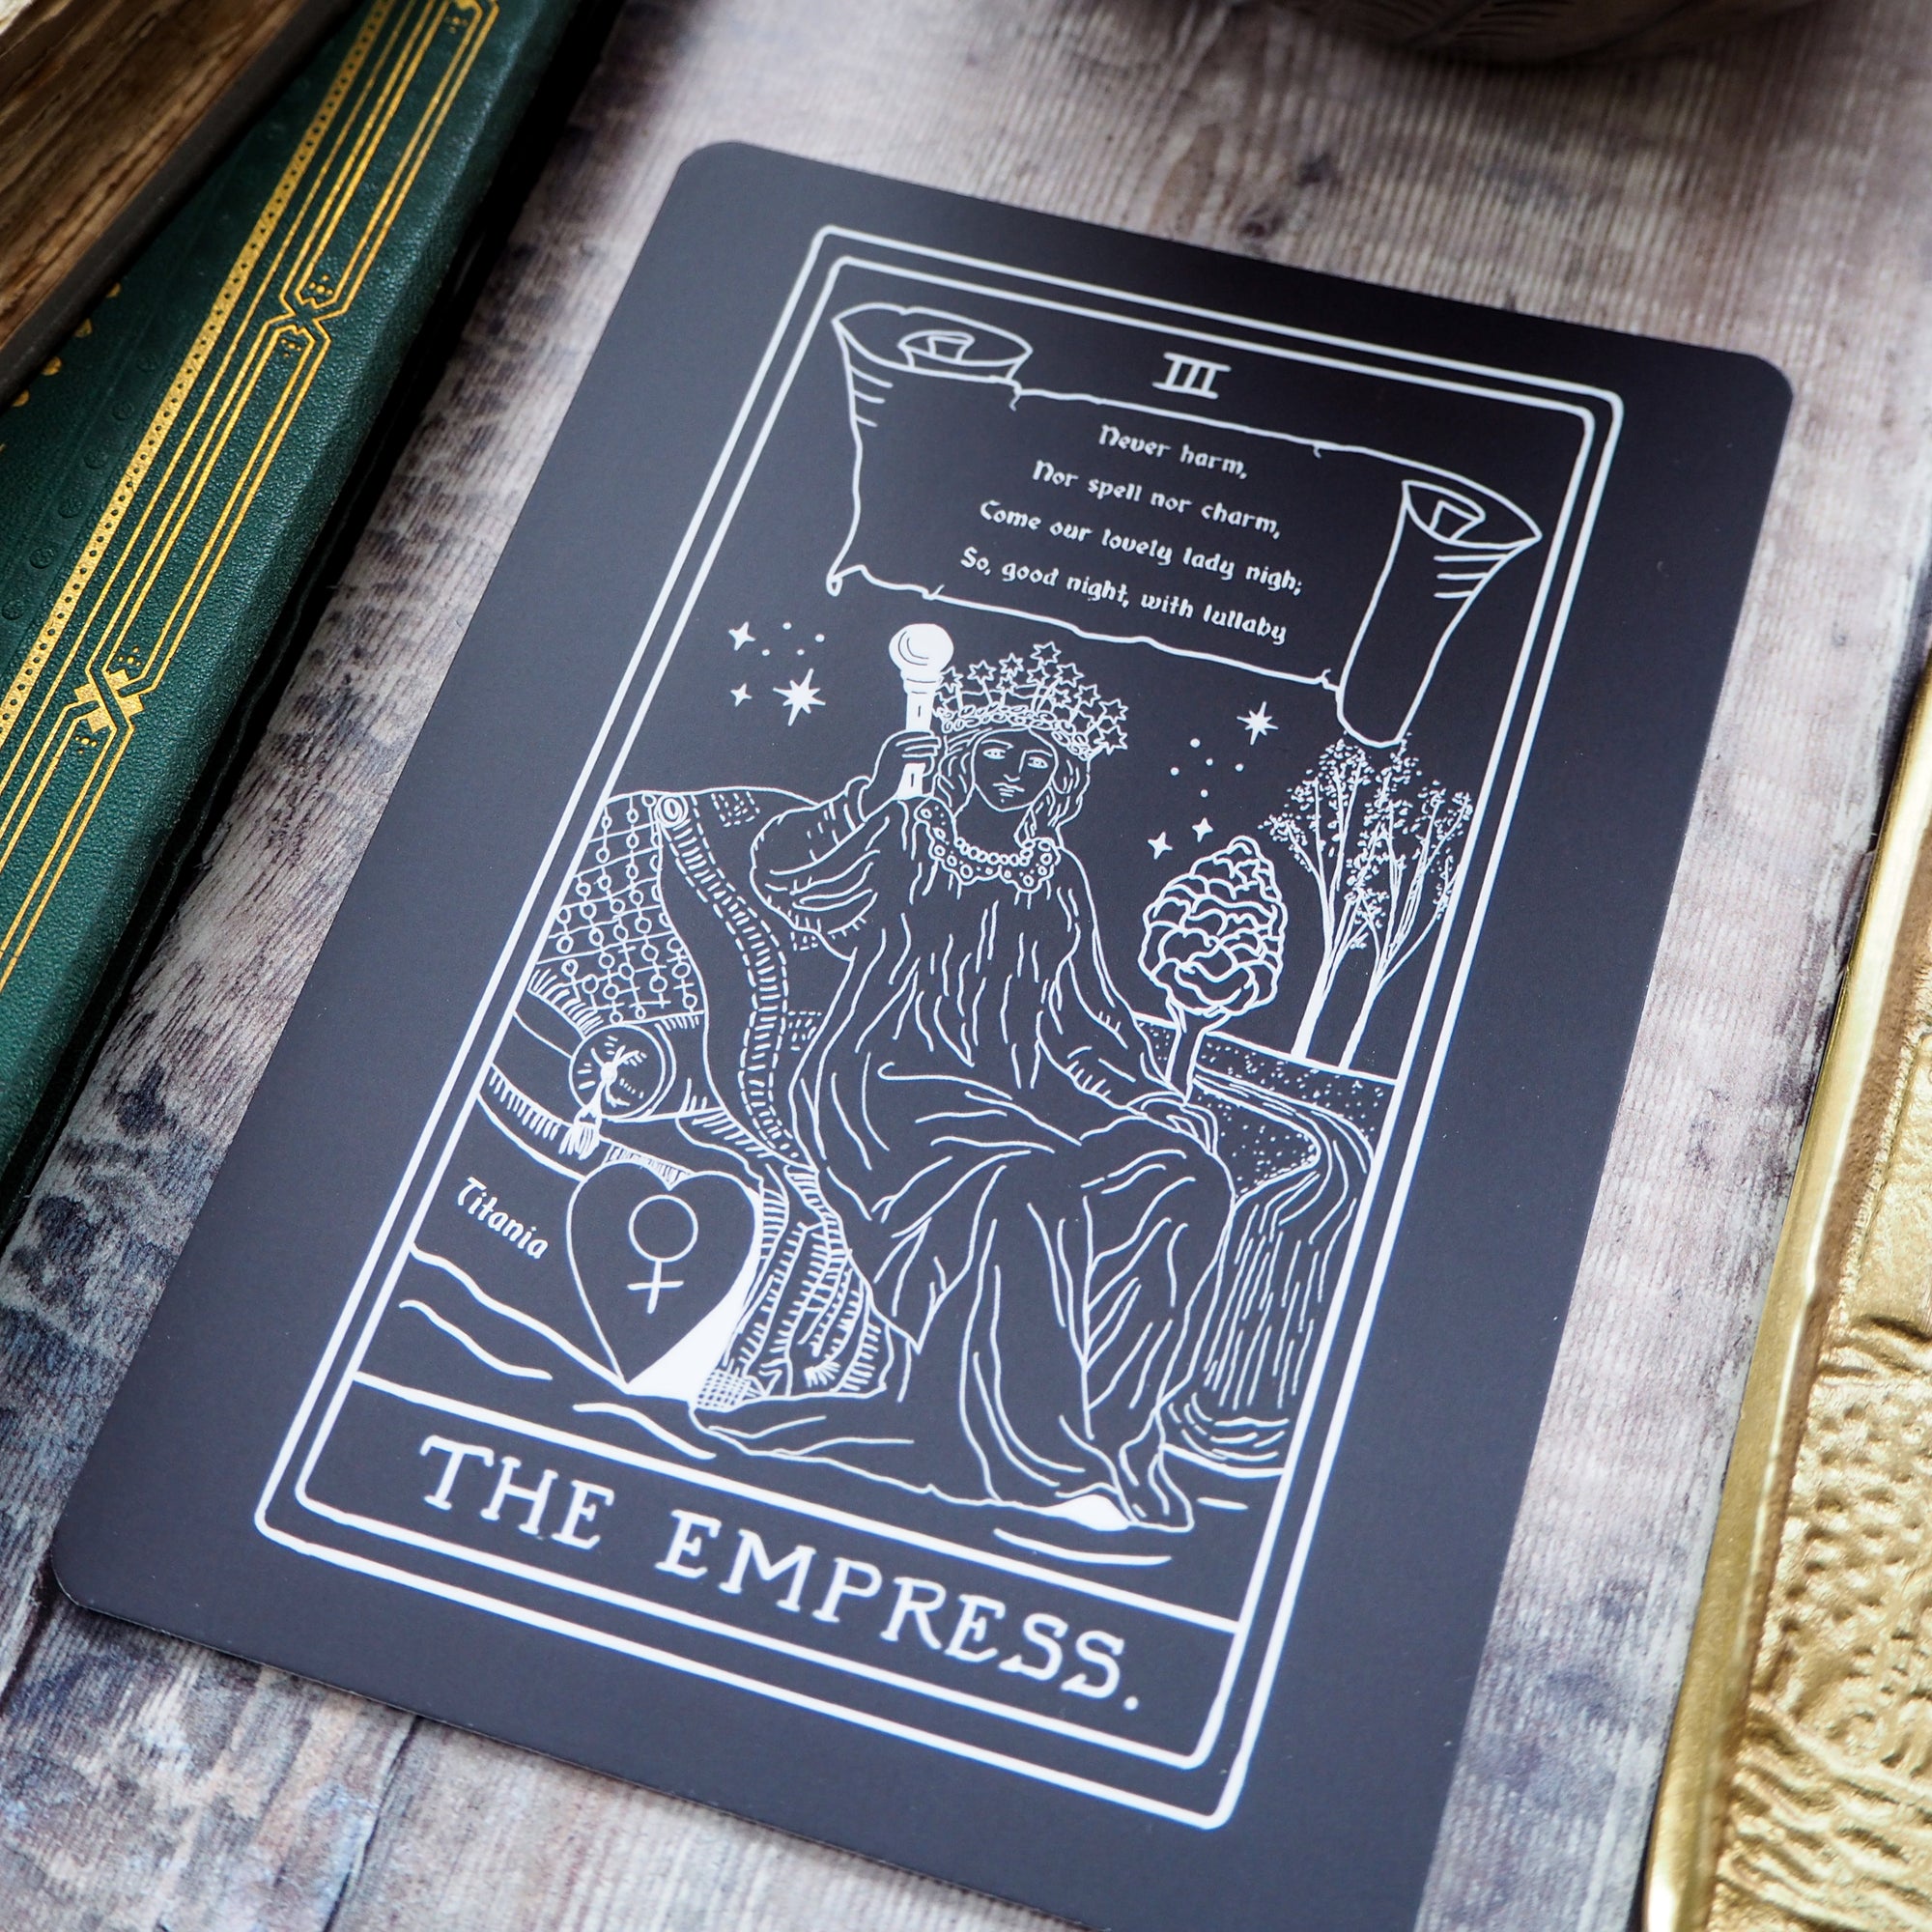 Titania Tarot Card Mini Print - The Empress - Shakespeare Tarot Collection